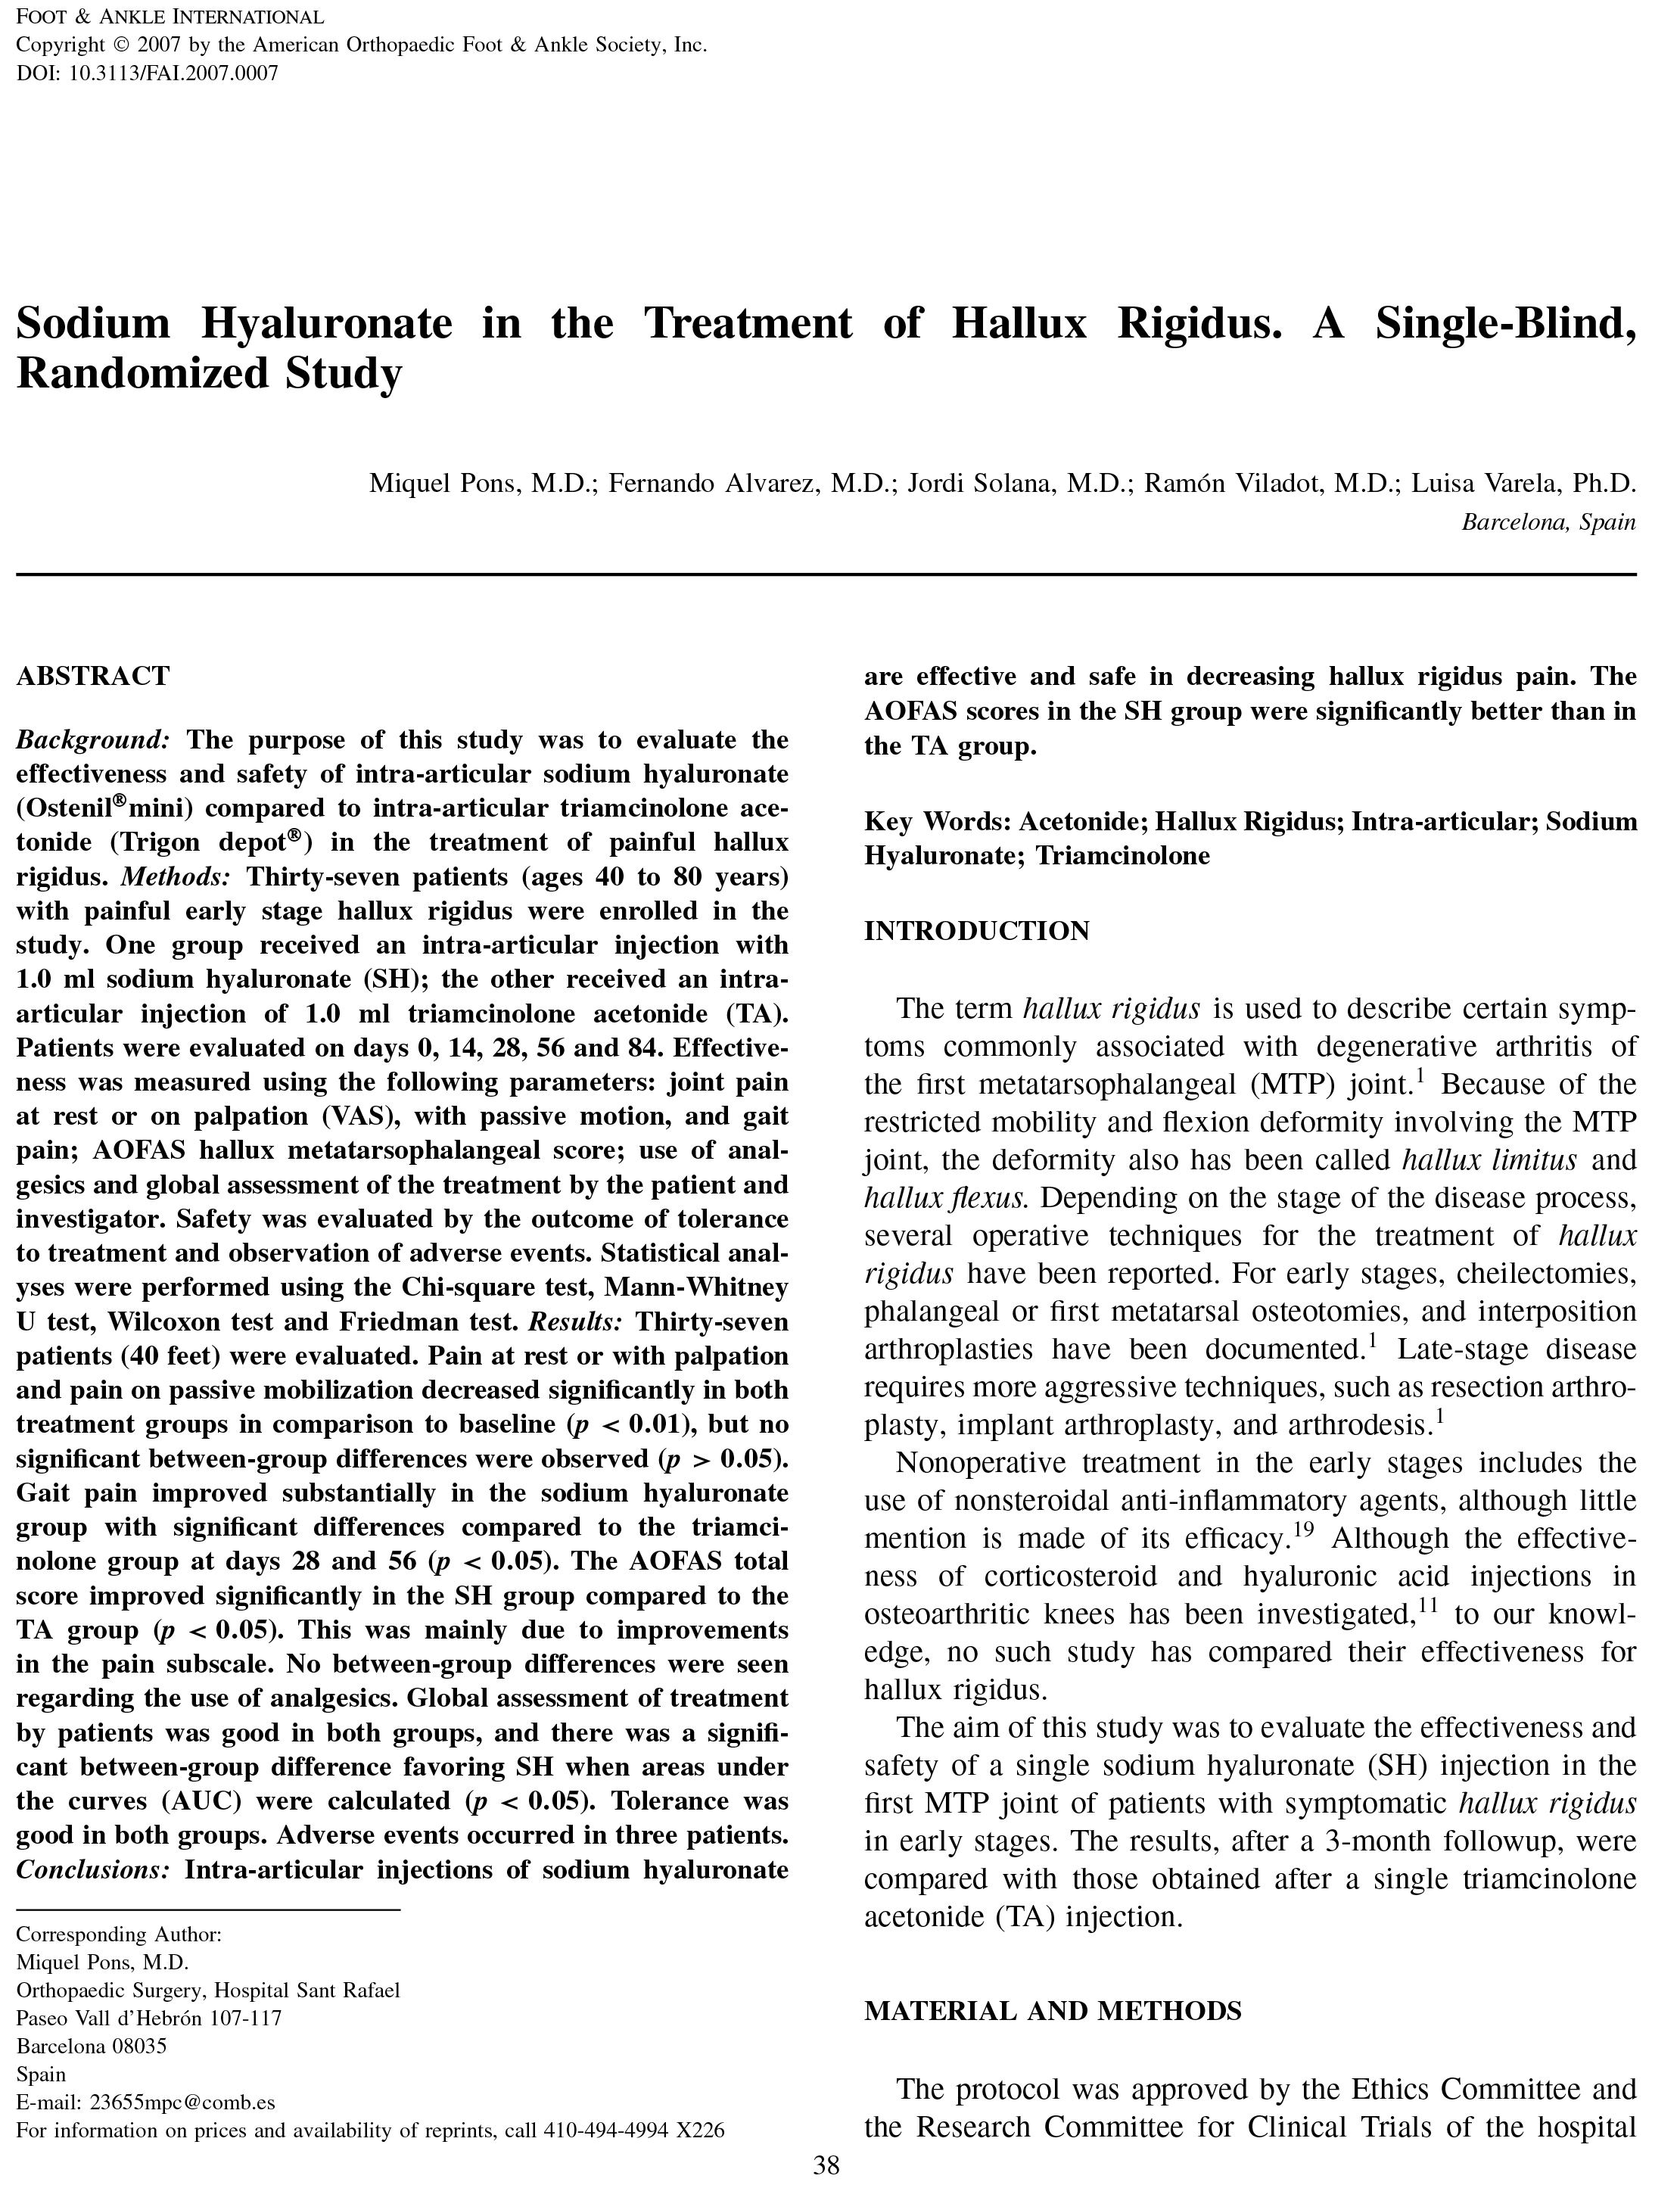 Sodium_Hyaluronate_in_the_treatment_of_Hallux_Rigidus_A_single-Bind_randomized_study-1.jpg